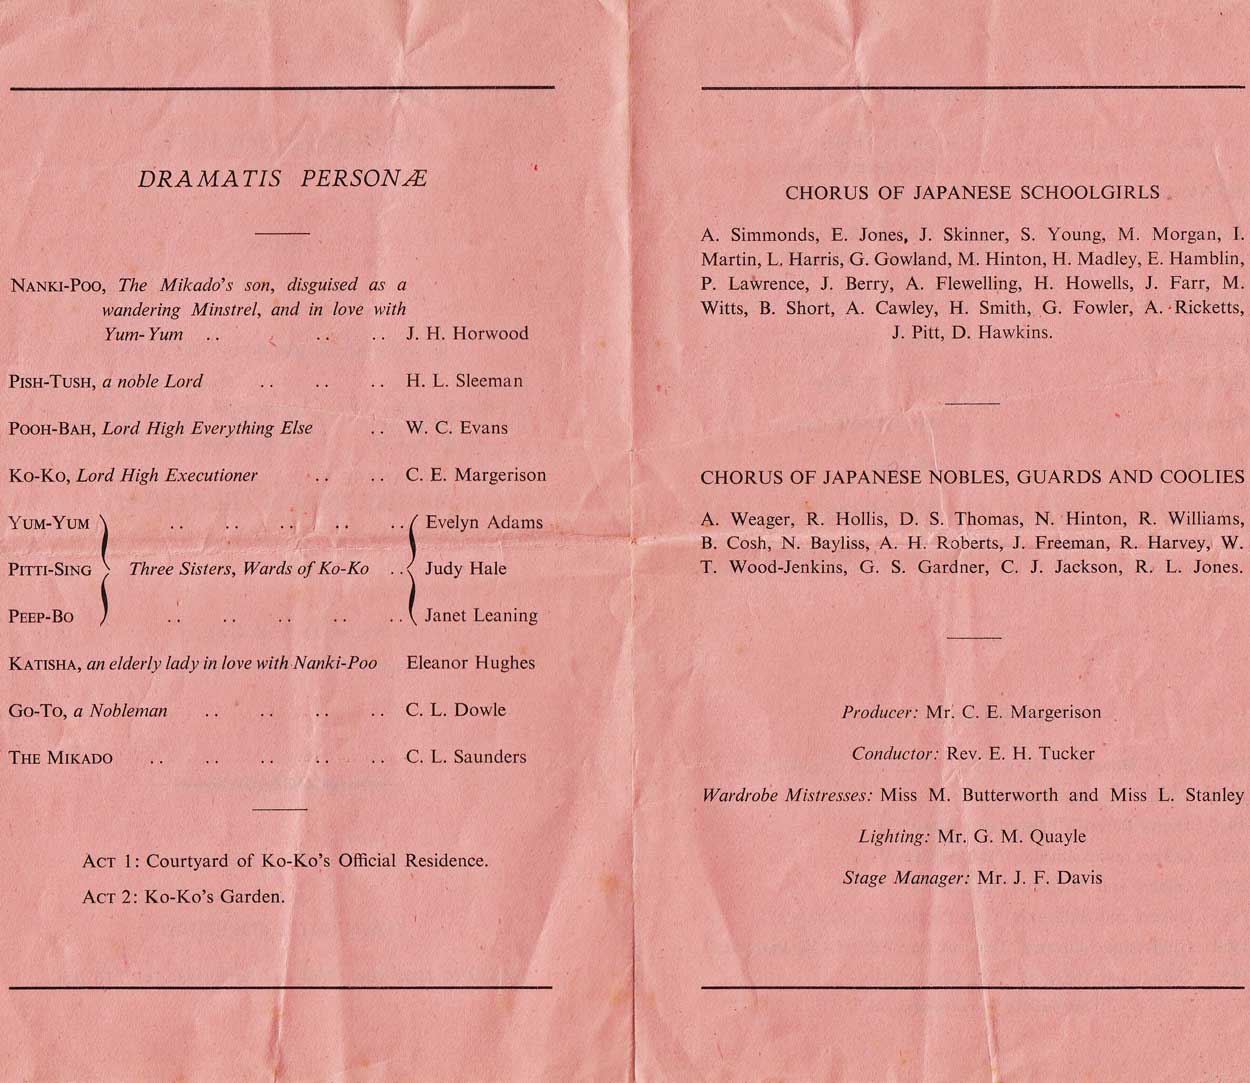 The program for The Mikado 1956